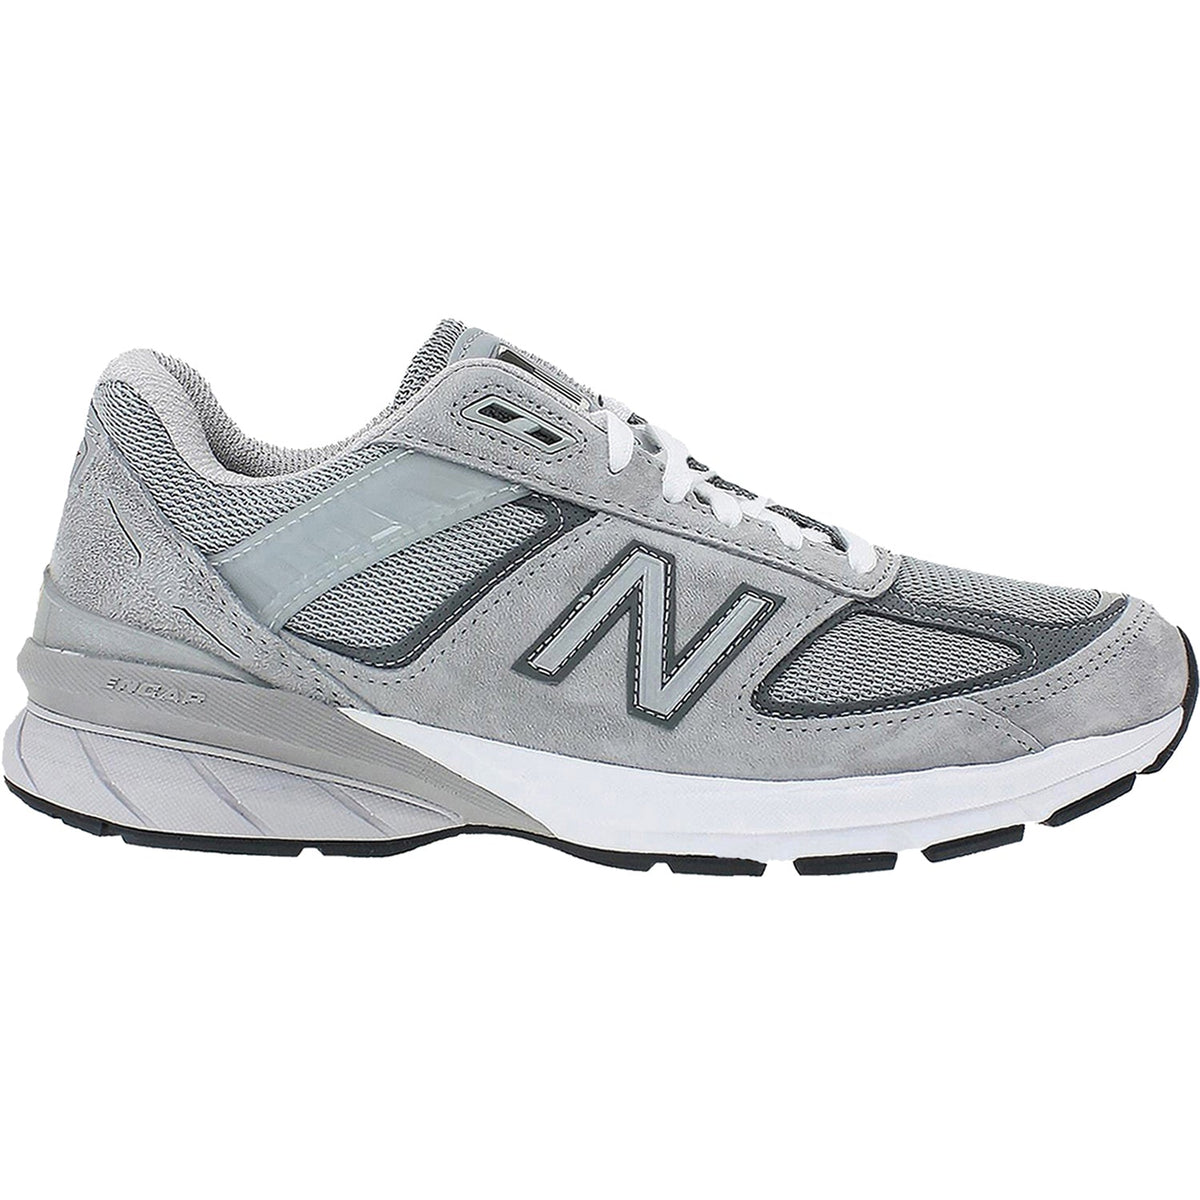 New Balance M990v5 Grey | Men's Everyday Athletic Shoes – Footwear etc.